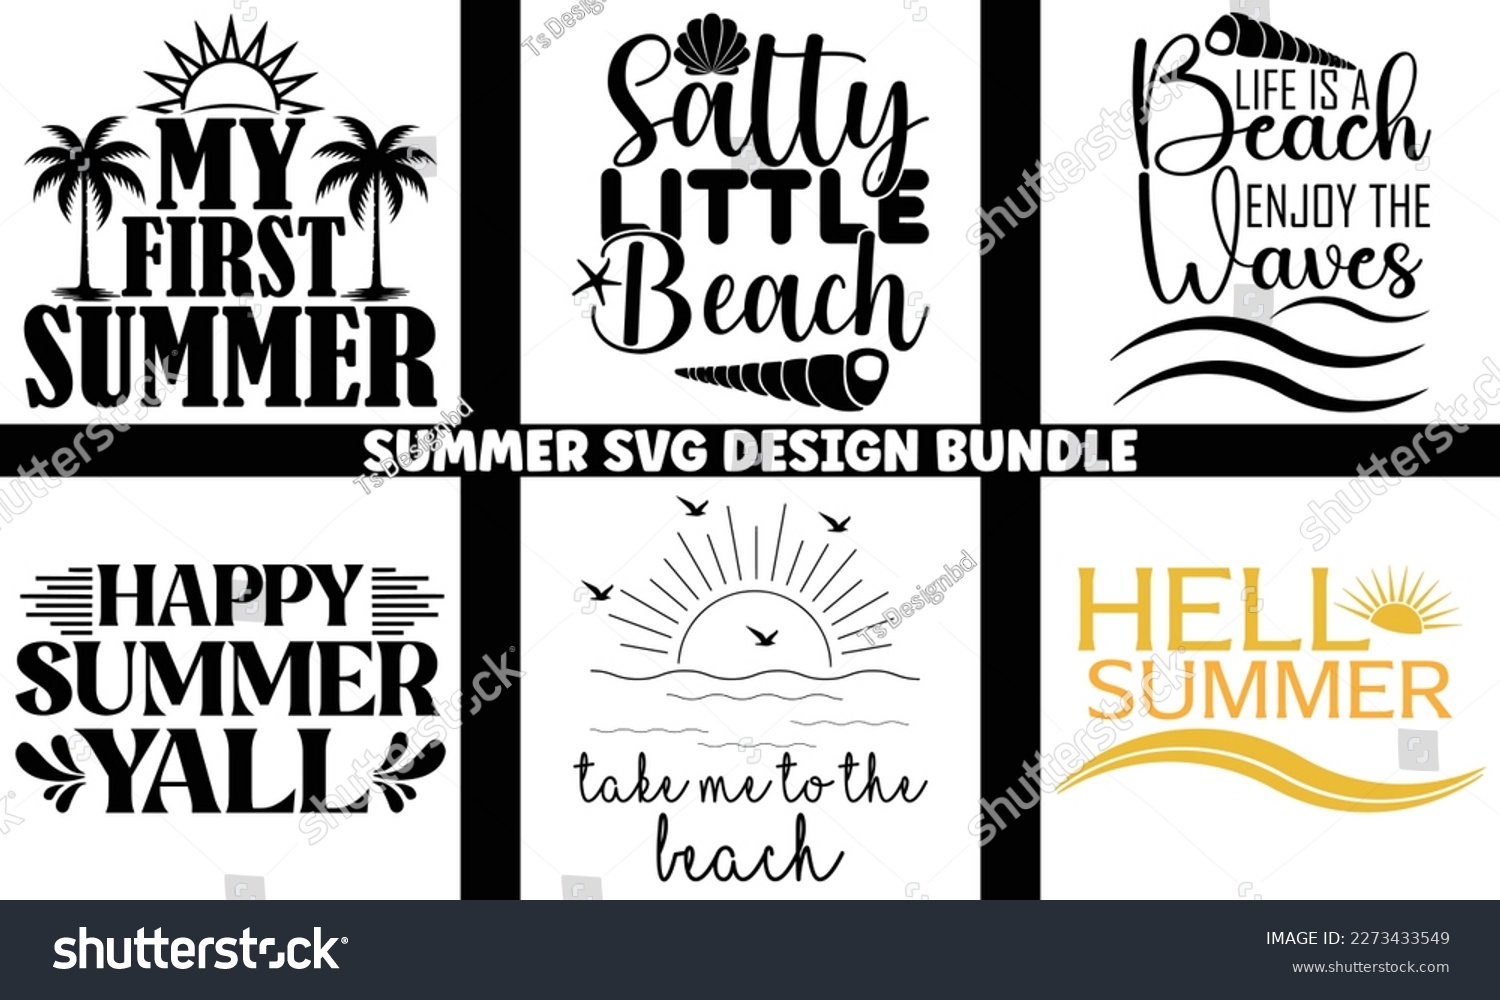 SVG of summer SVG design bundle ,Summer Beach Bundle SVG,Summer Quotes SVG Designs Bundle,Summer Design for Shirts,Hello Summer quotes t shirt designs bundle,Quotes about Summer svg